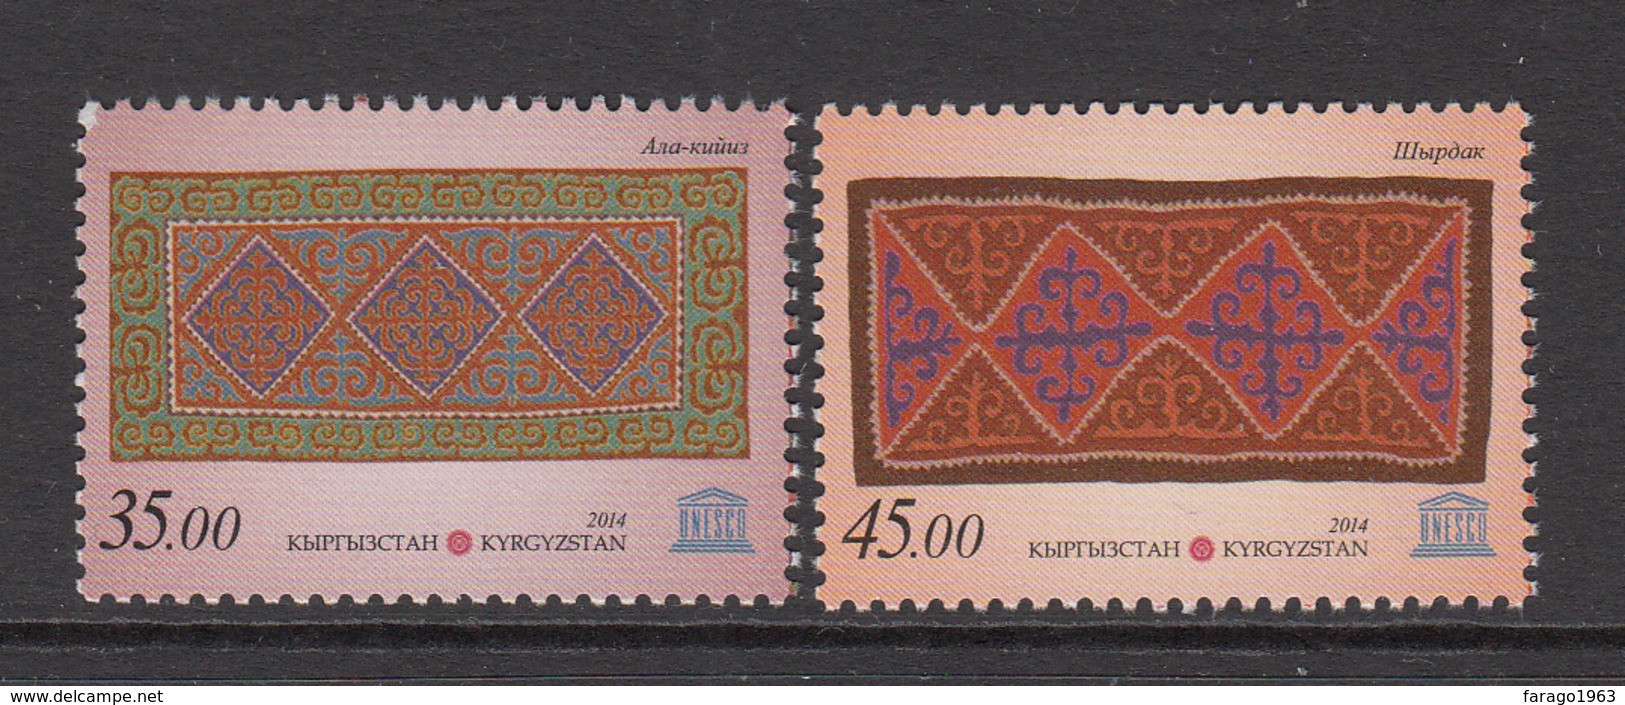 2014 Kyrgyzstan Traditional Carpets Set Of 2 MNH - Kyrgyzstan